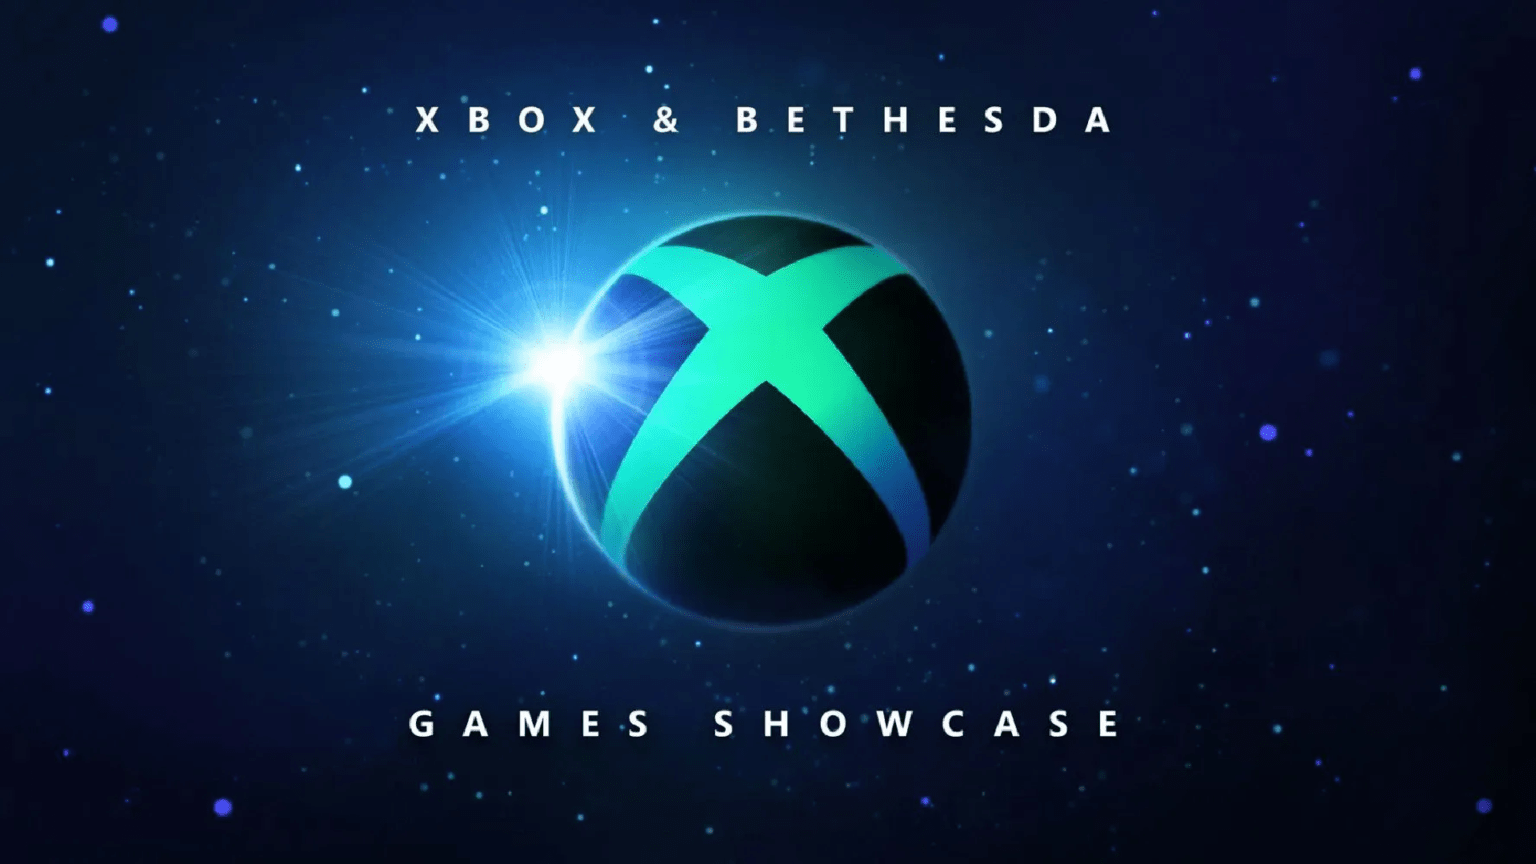 Xbox and Bethesda Games Showcase Klobrille mostra un video dedicato